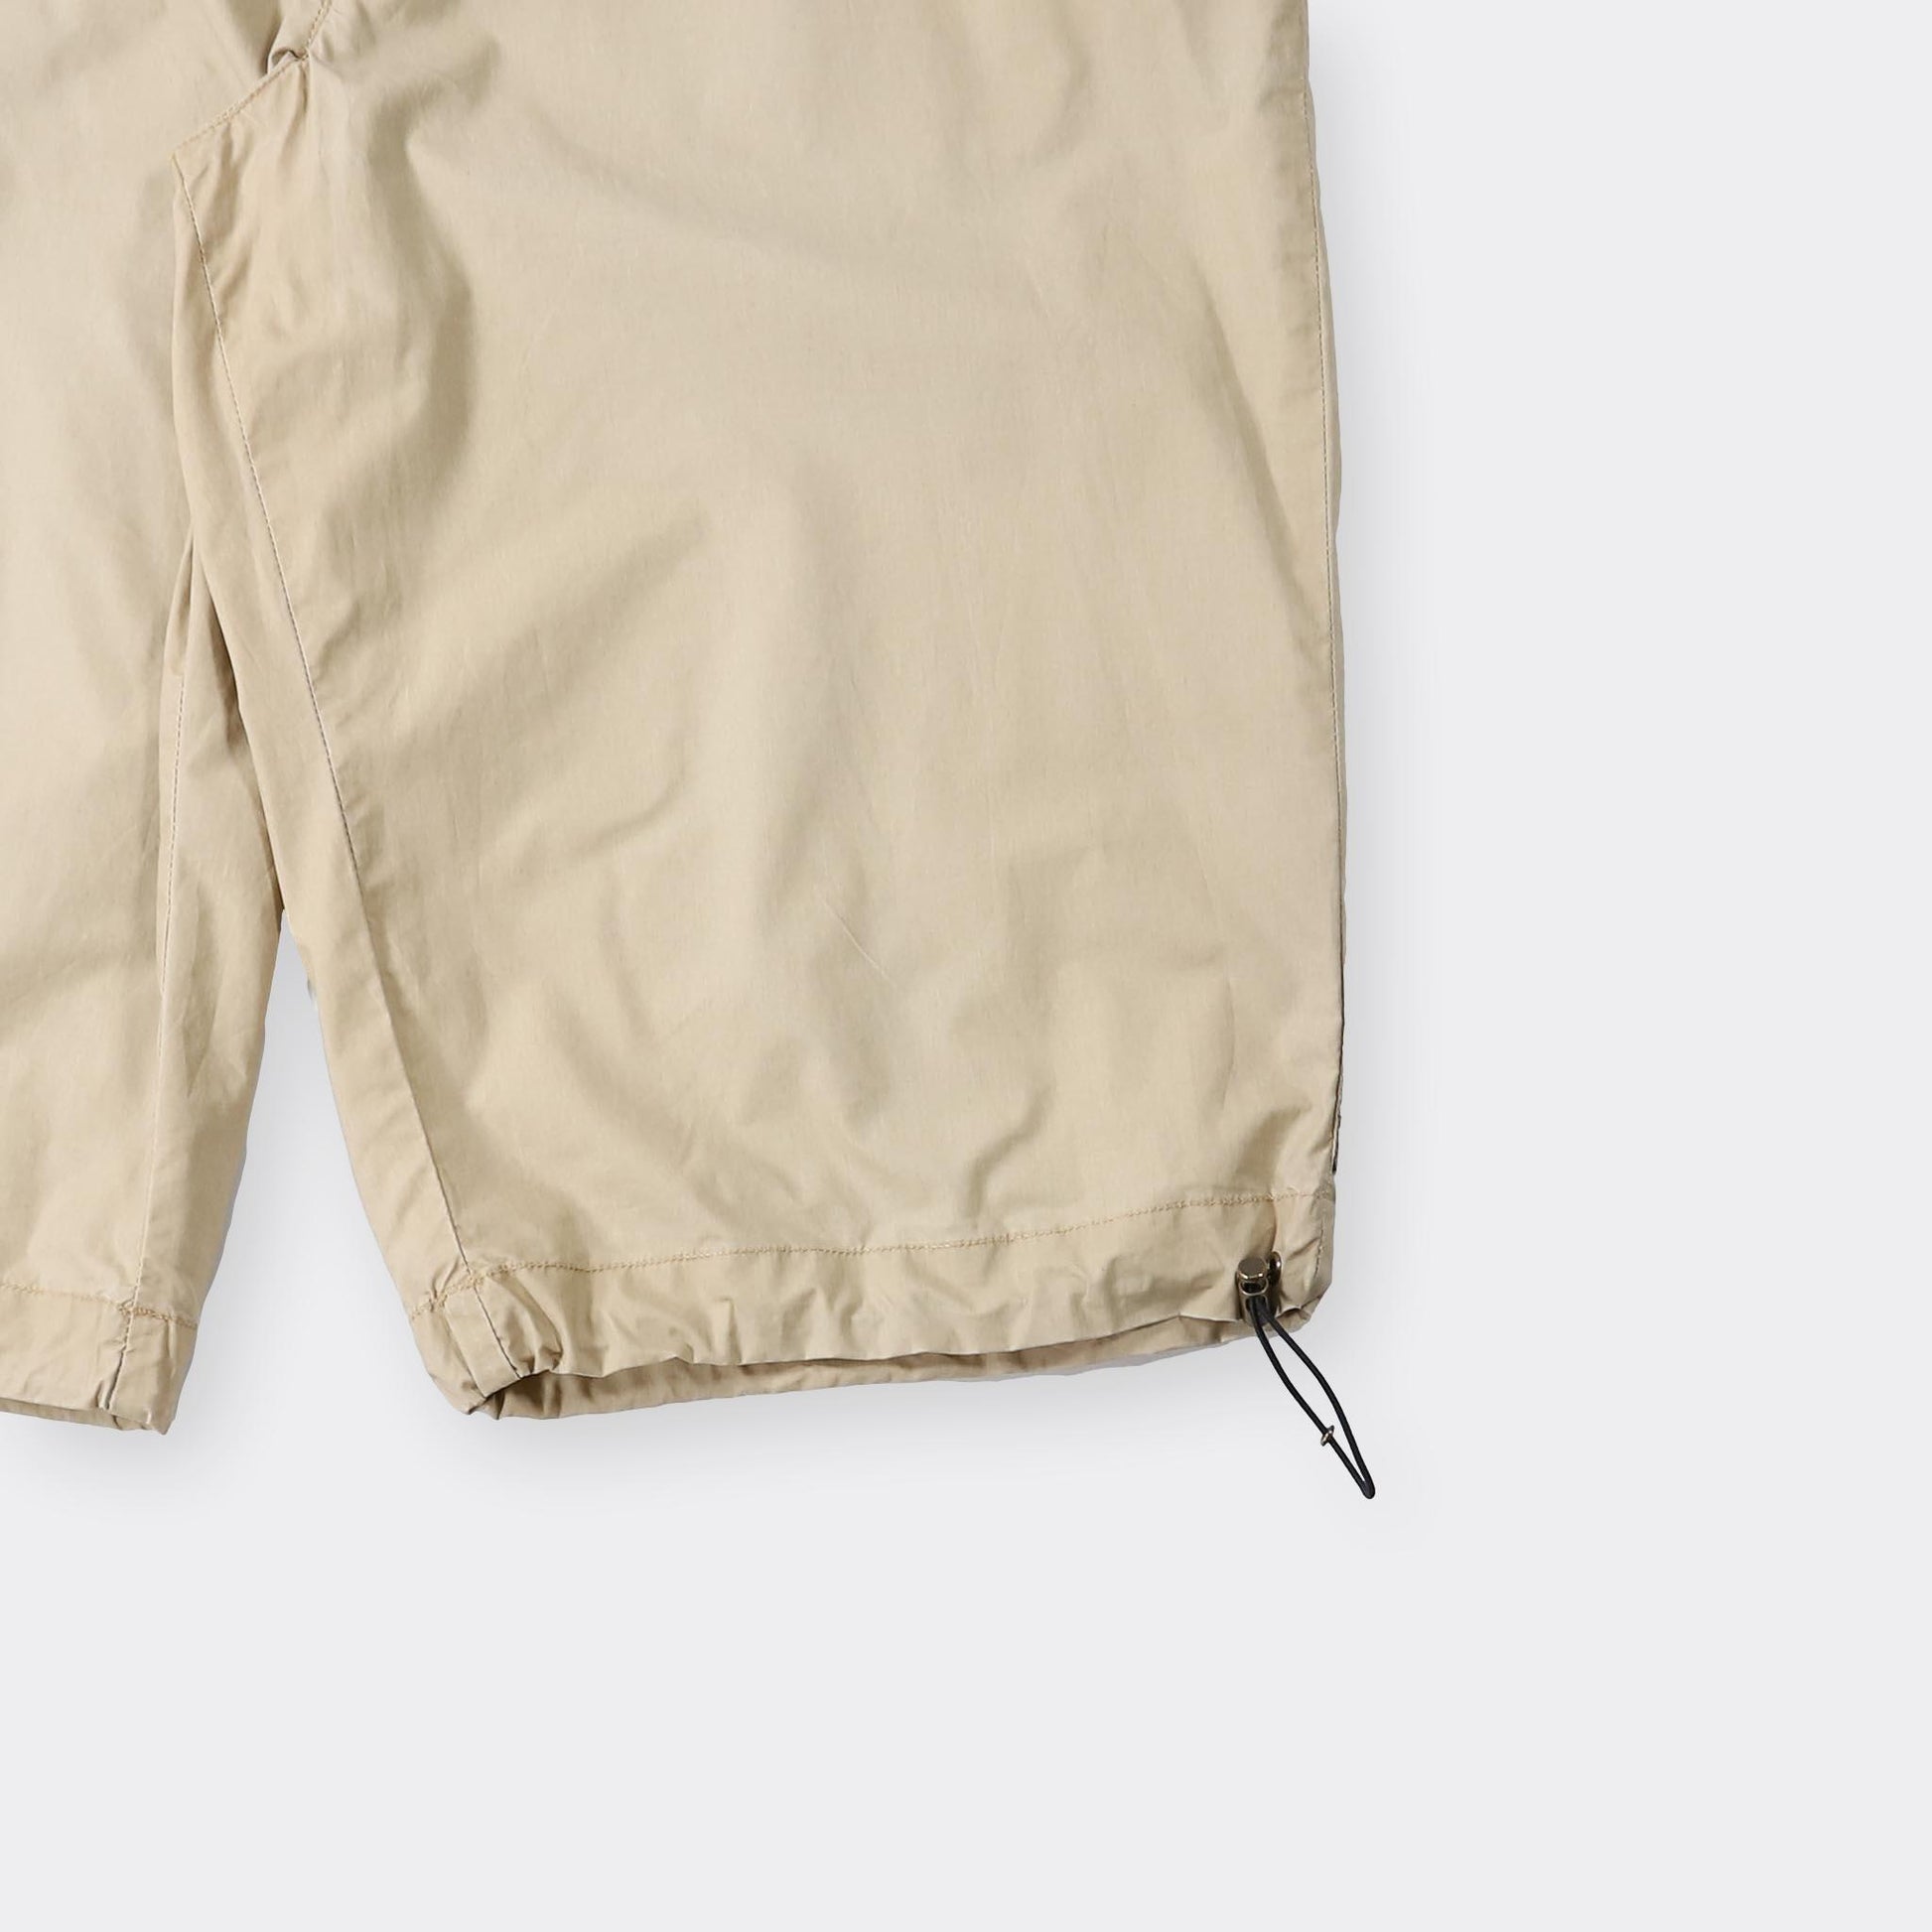 Moncler Vintage Shorts - 30" x 14.5" - Known Source